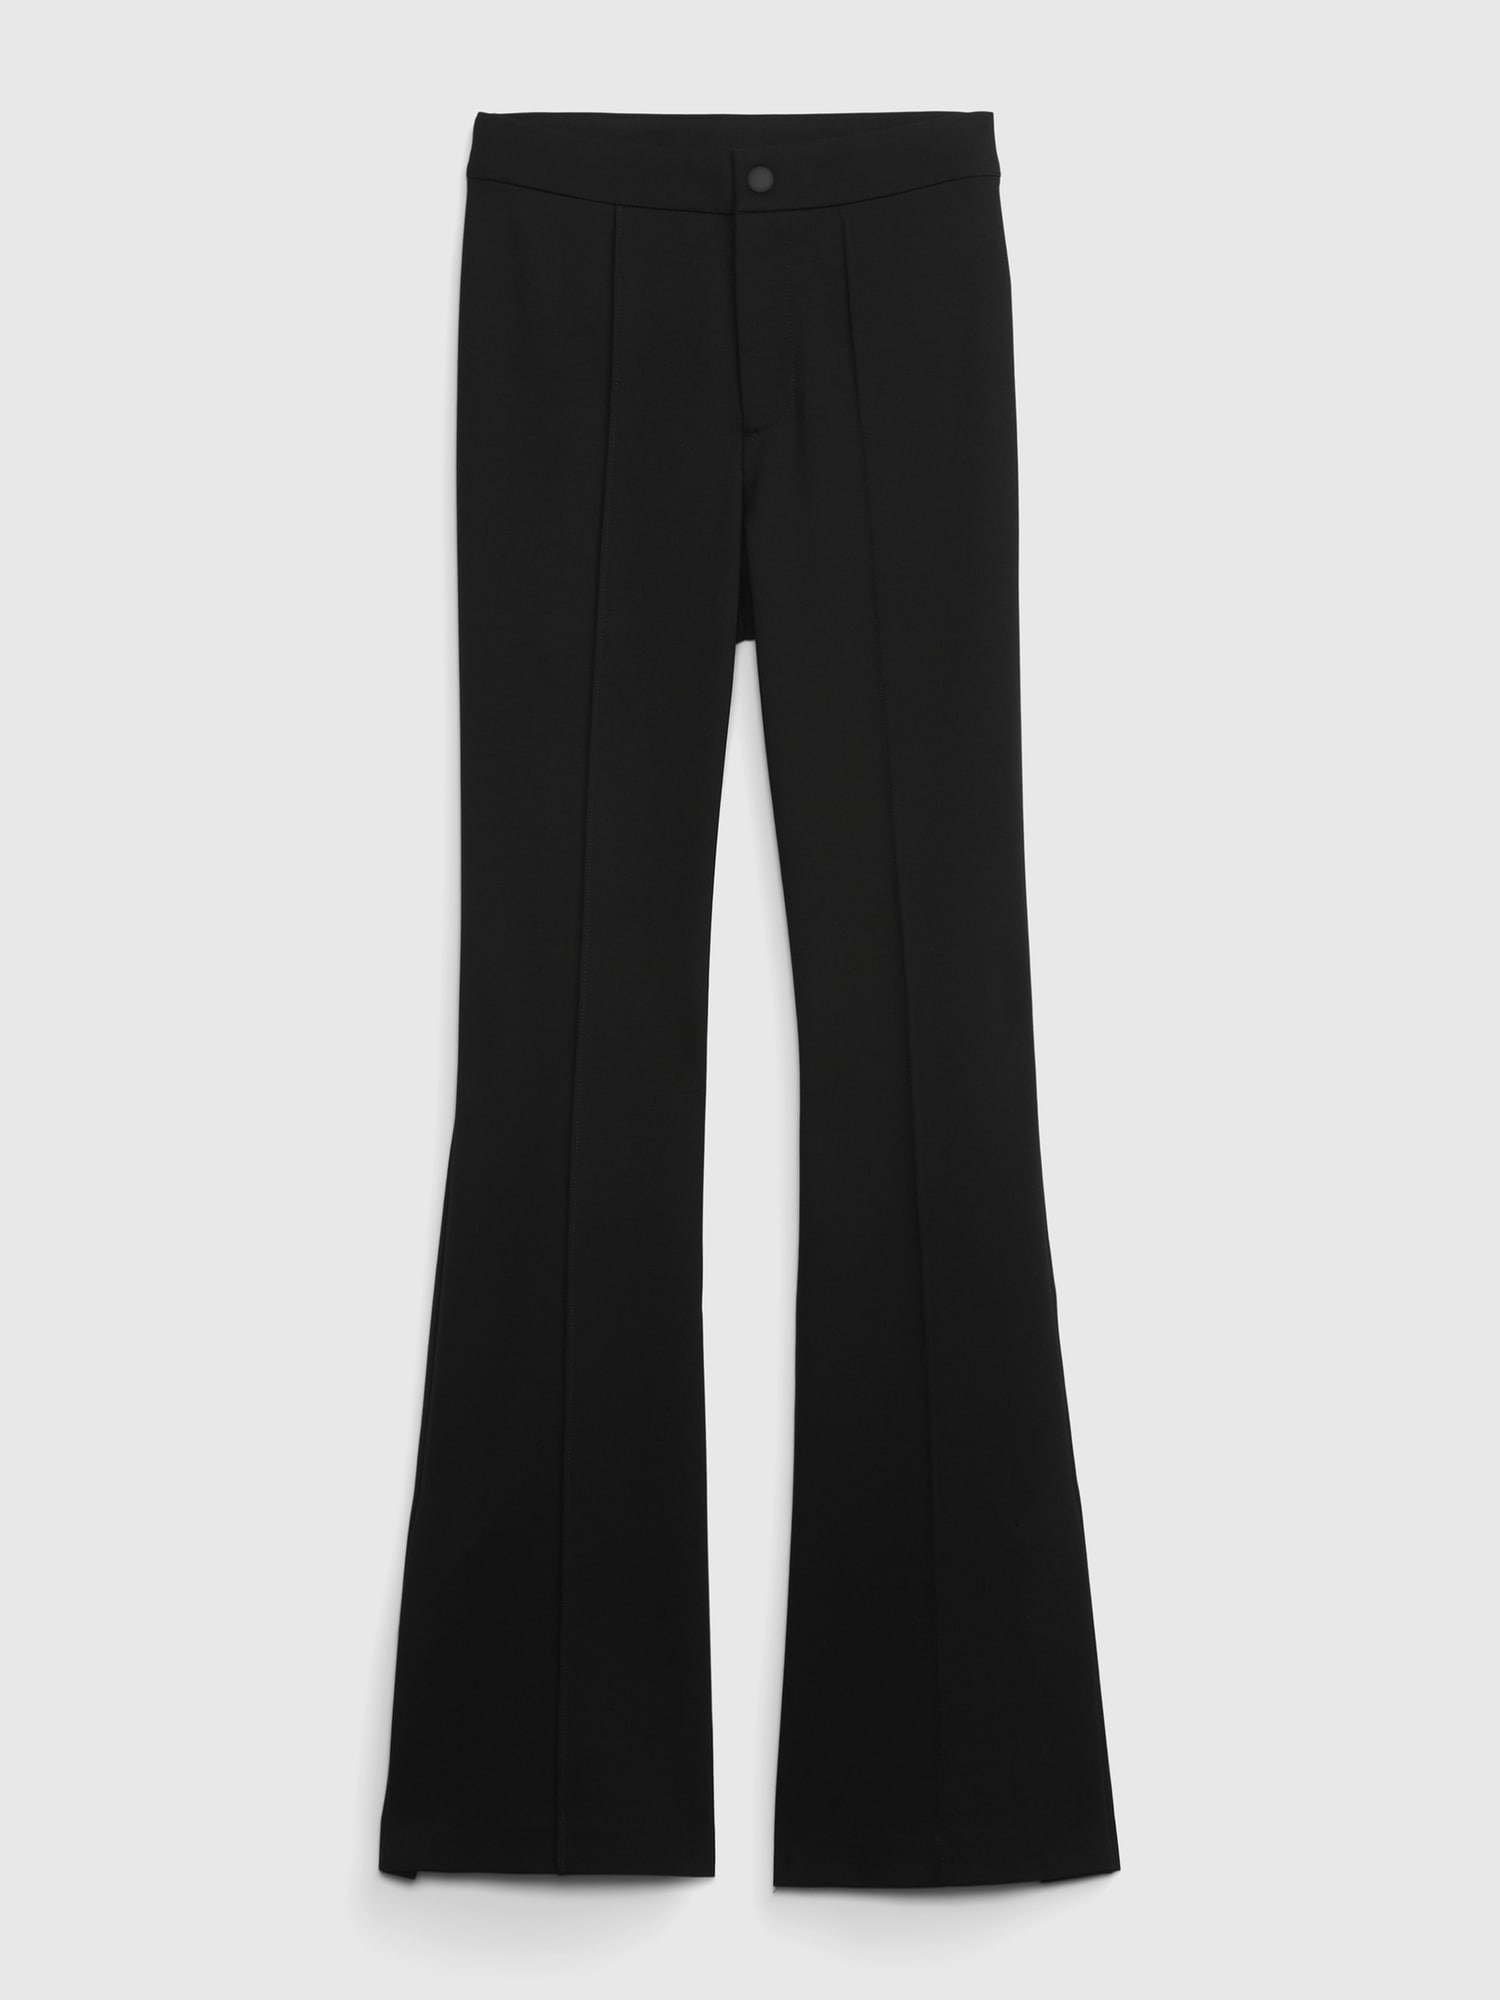 American Giant High Rise Cropped Crop Flare Bootcut Yoga Pants Black Medium  M 8